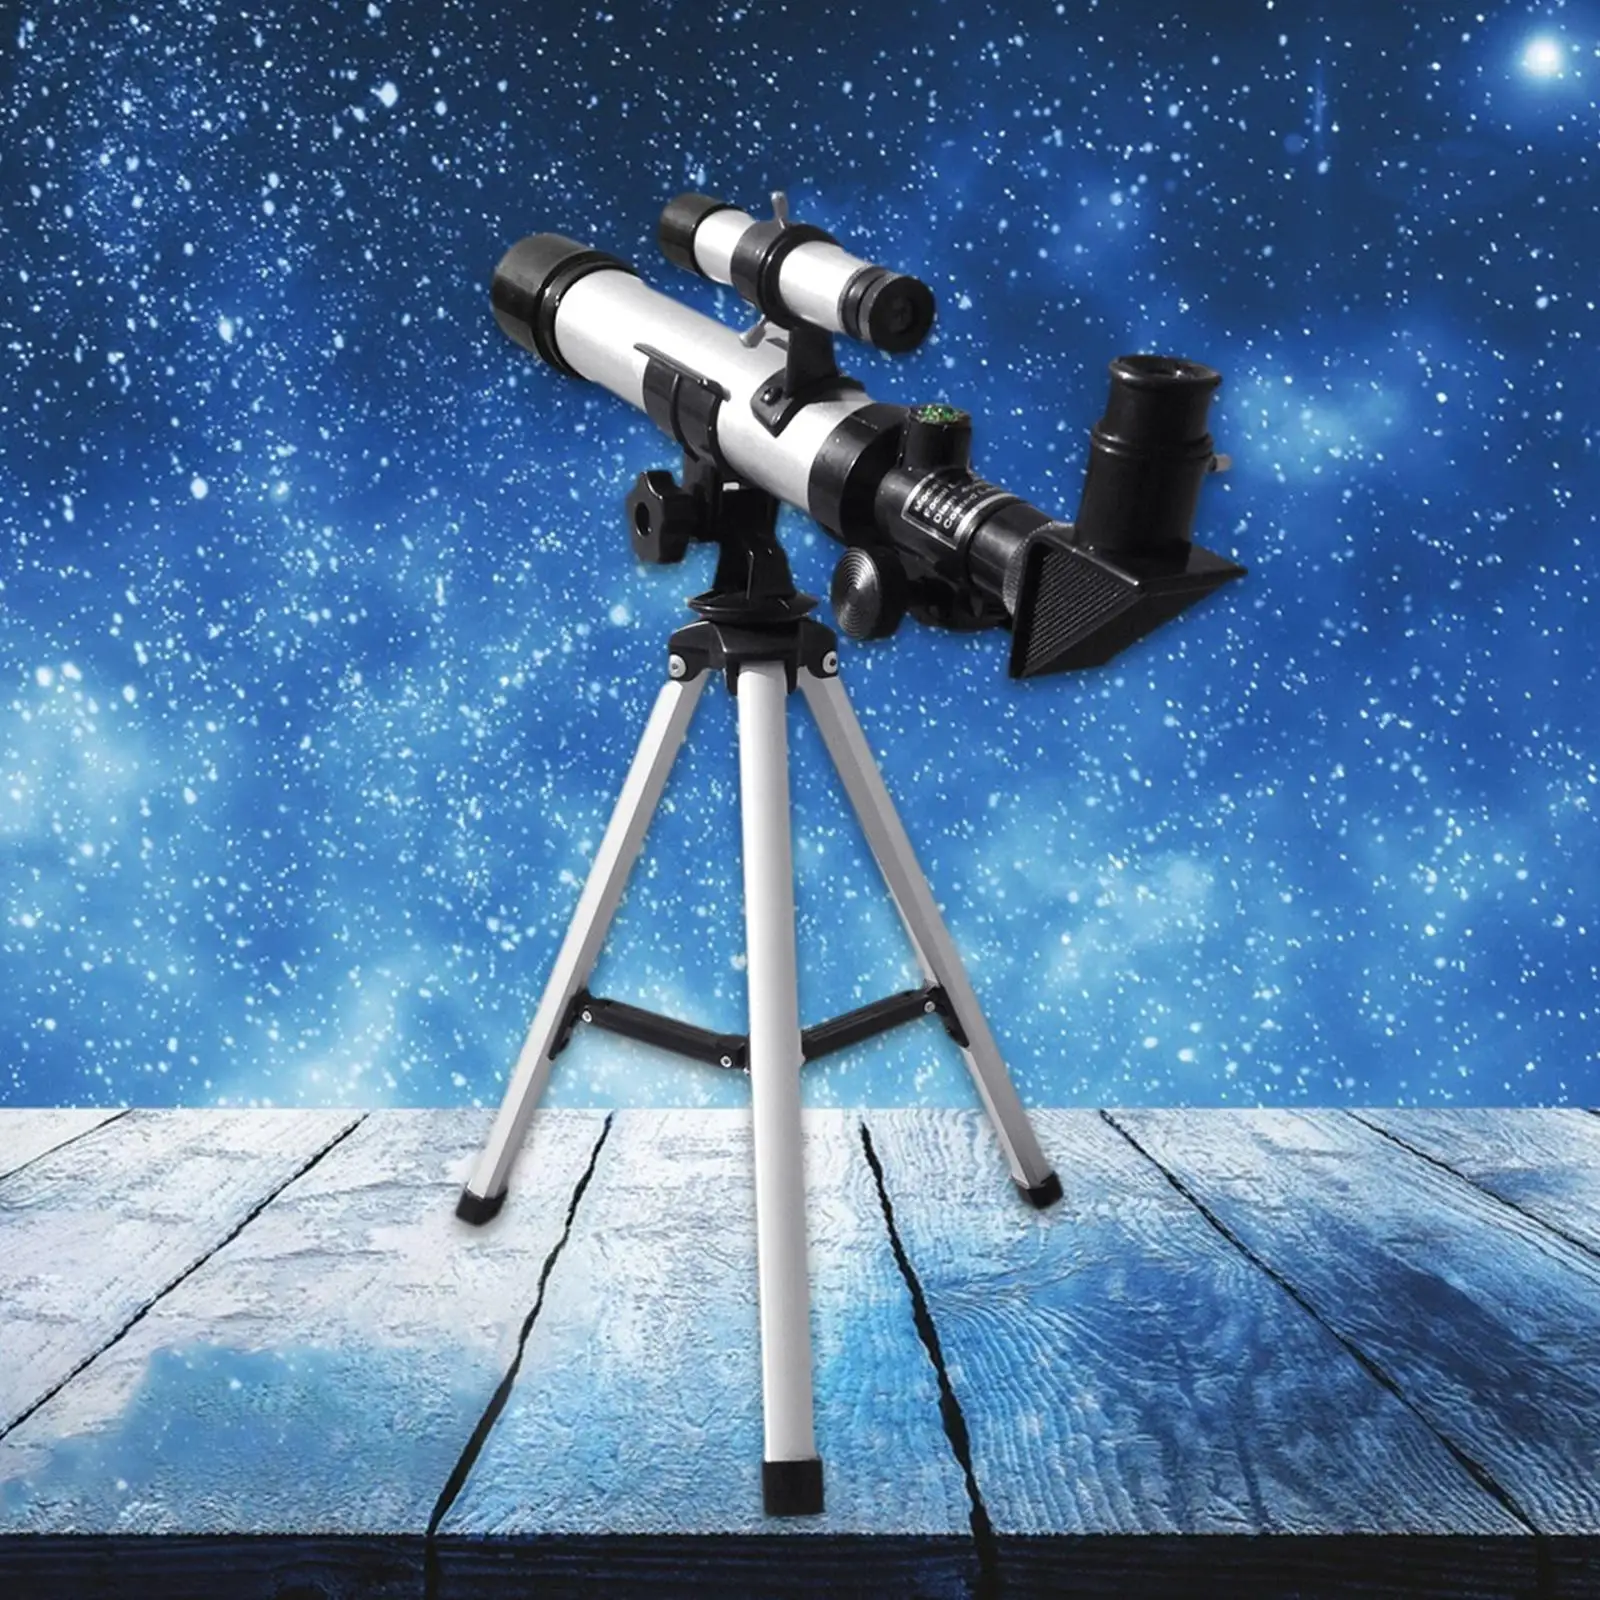 Kids Astronomical Telescope 40mm Objective Lens 400400 for Beginners